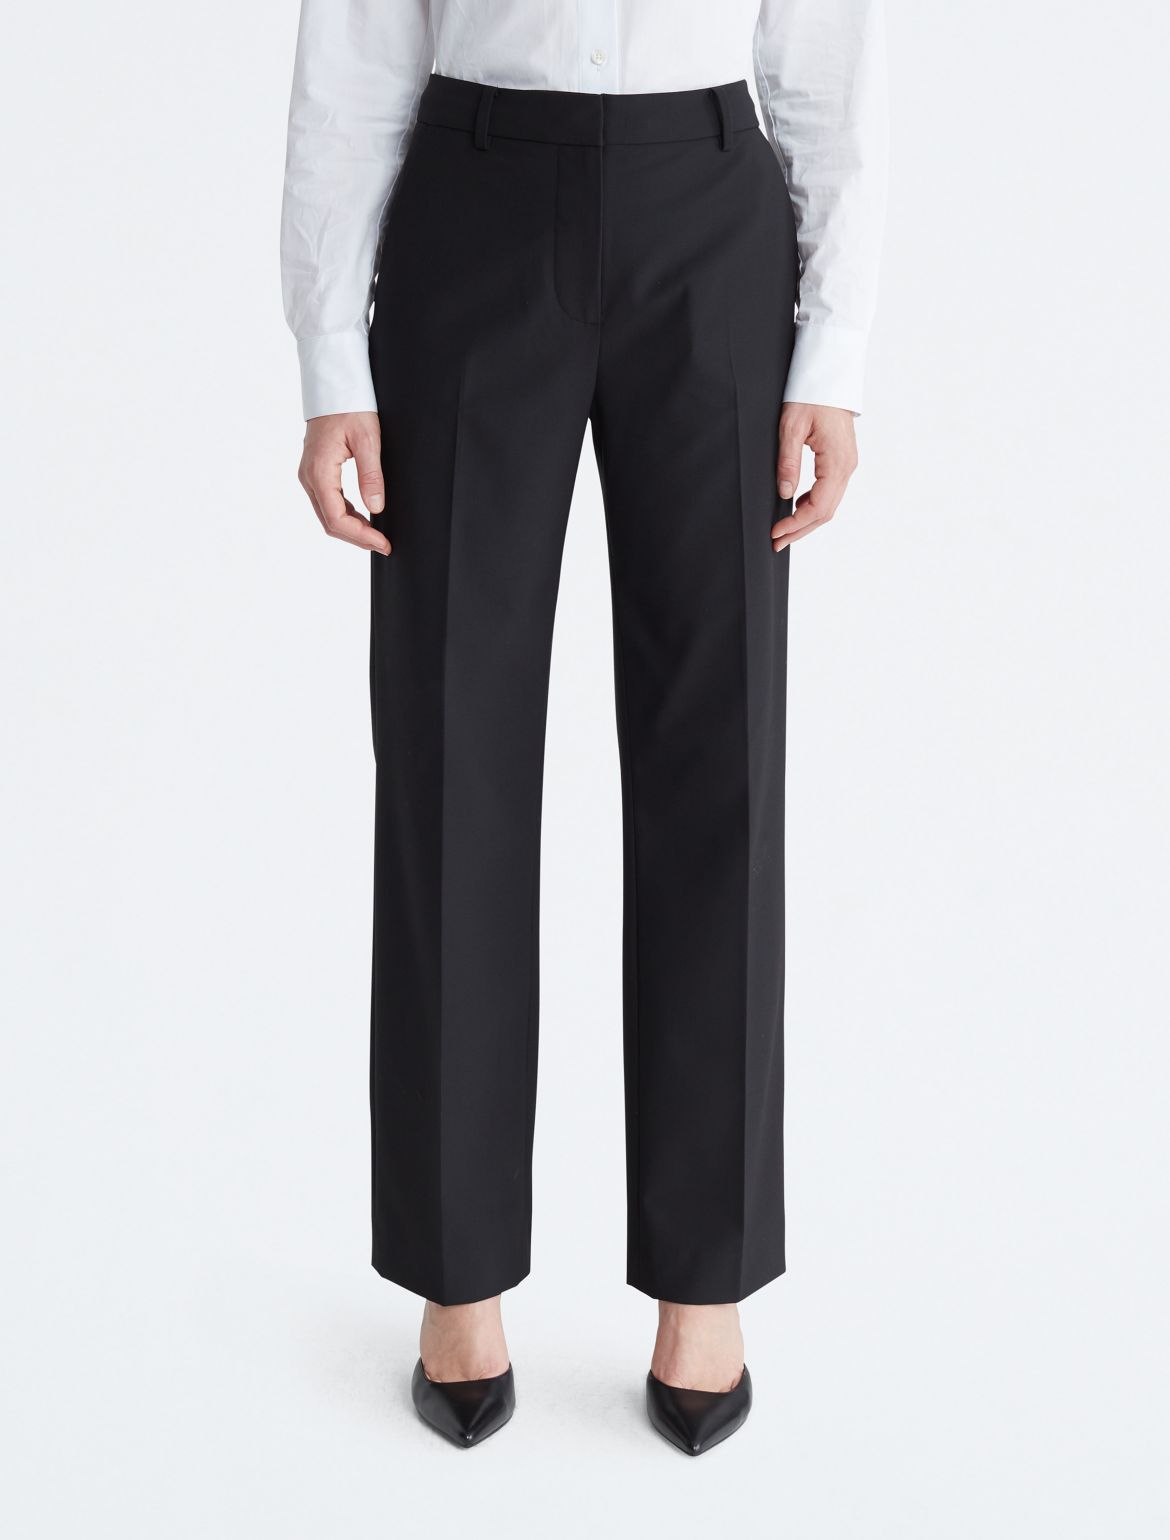 Calvin Klein Women's Refined Stretch Classic Trouser - Black - 27